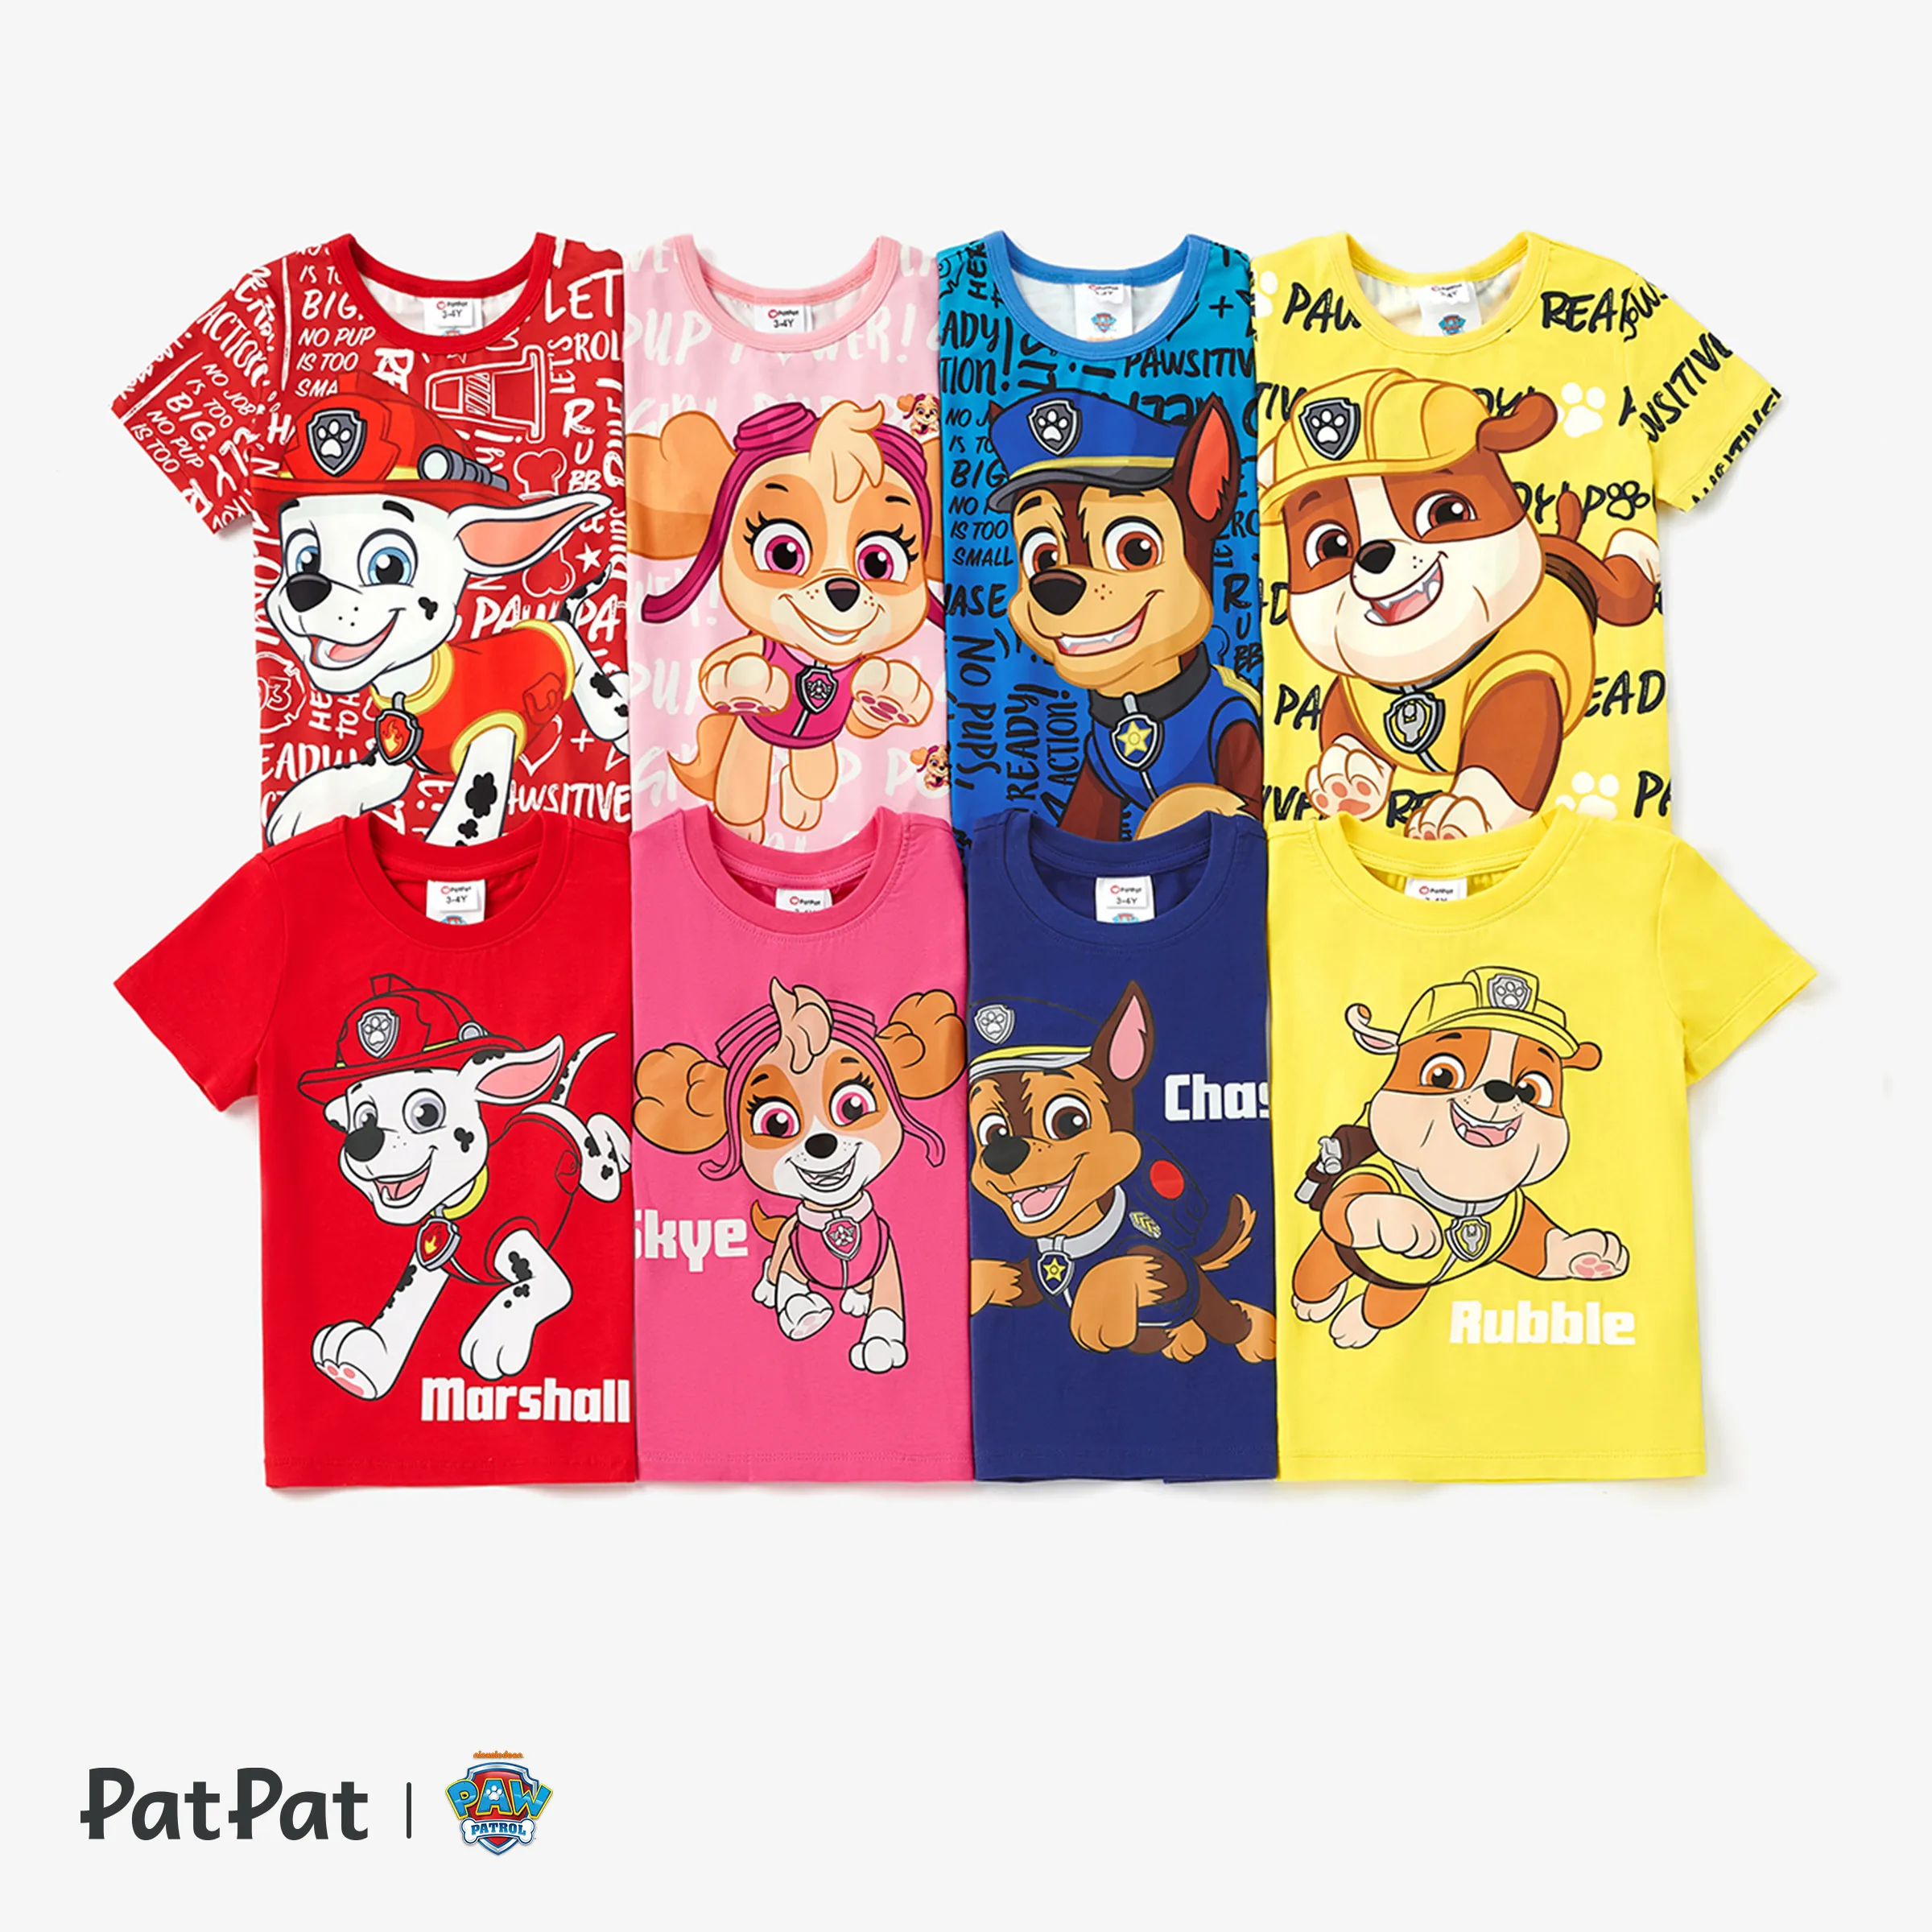 PAW Patrol 1pc  Toddler Girl/Boy Cute Character Print T-shirt